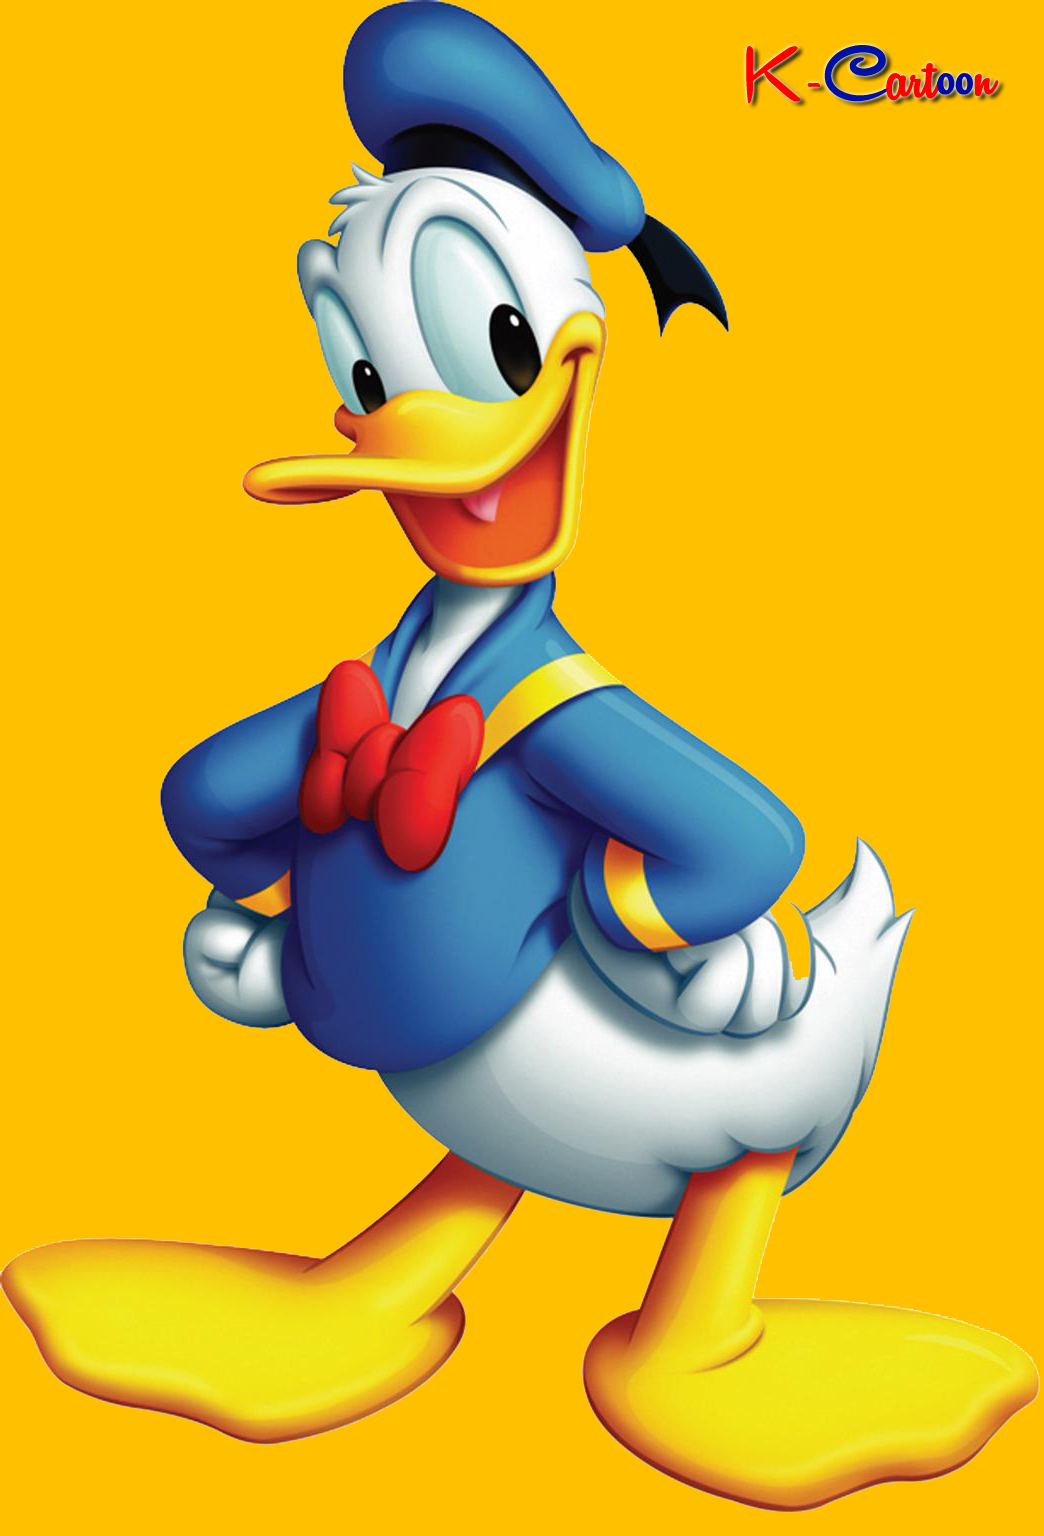 Gambar Wallpaper Donald Duck Format JPEG Terbaru K Kartun 